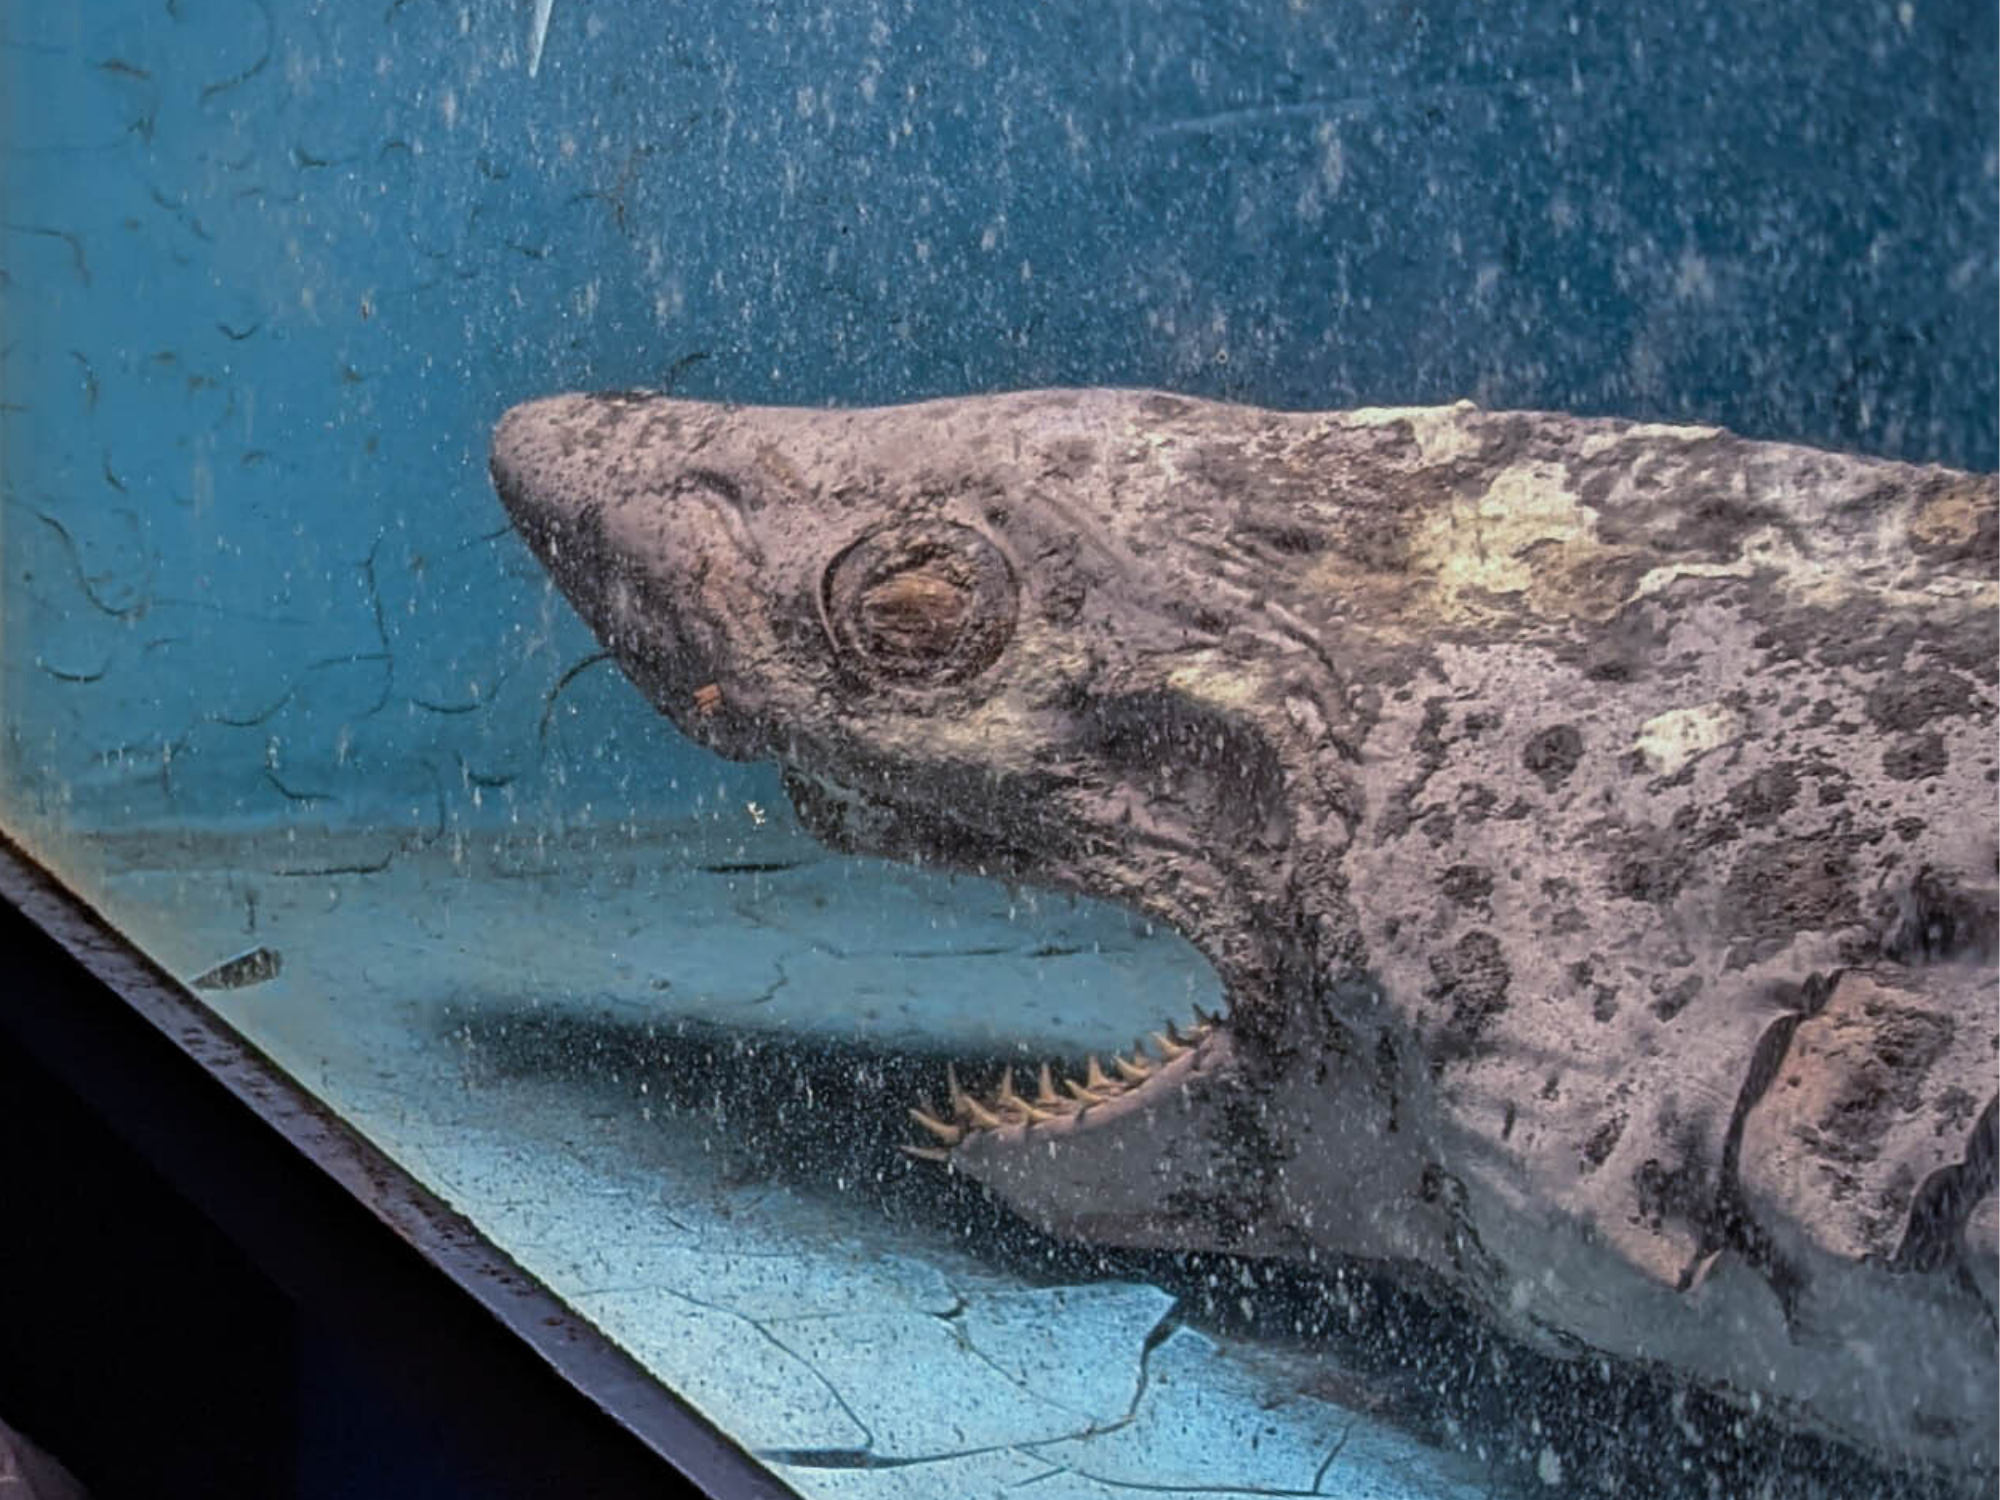 Zombie Shark Discovered at Abandoned Aquarium in Nightmarish Video